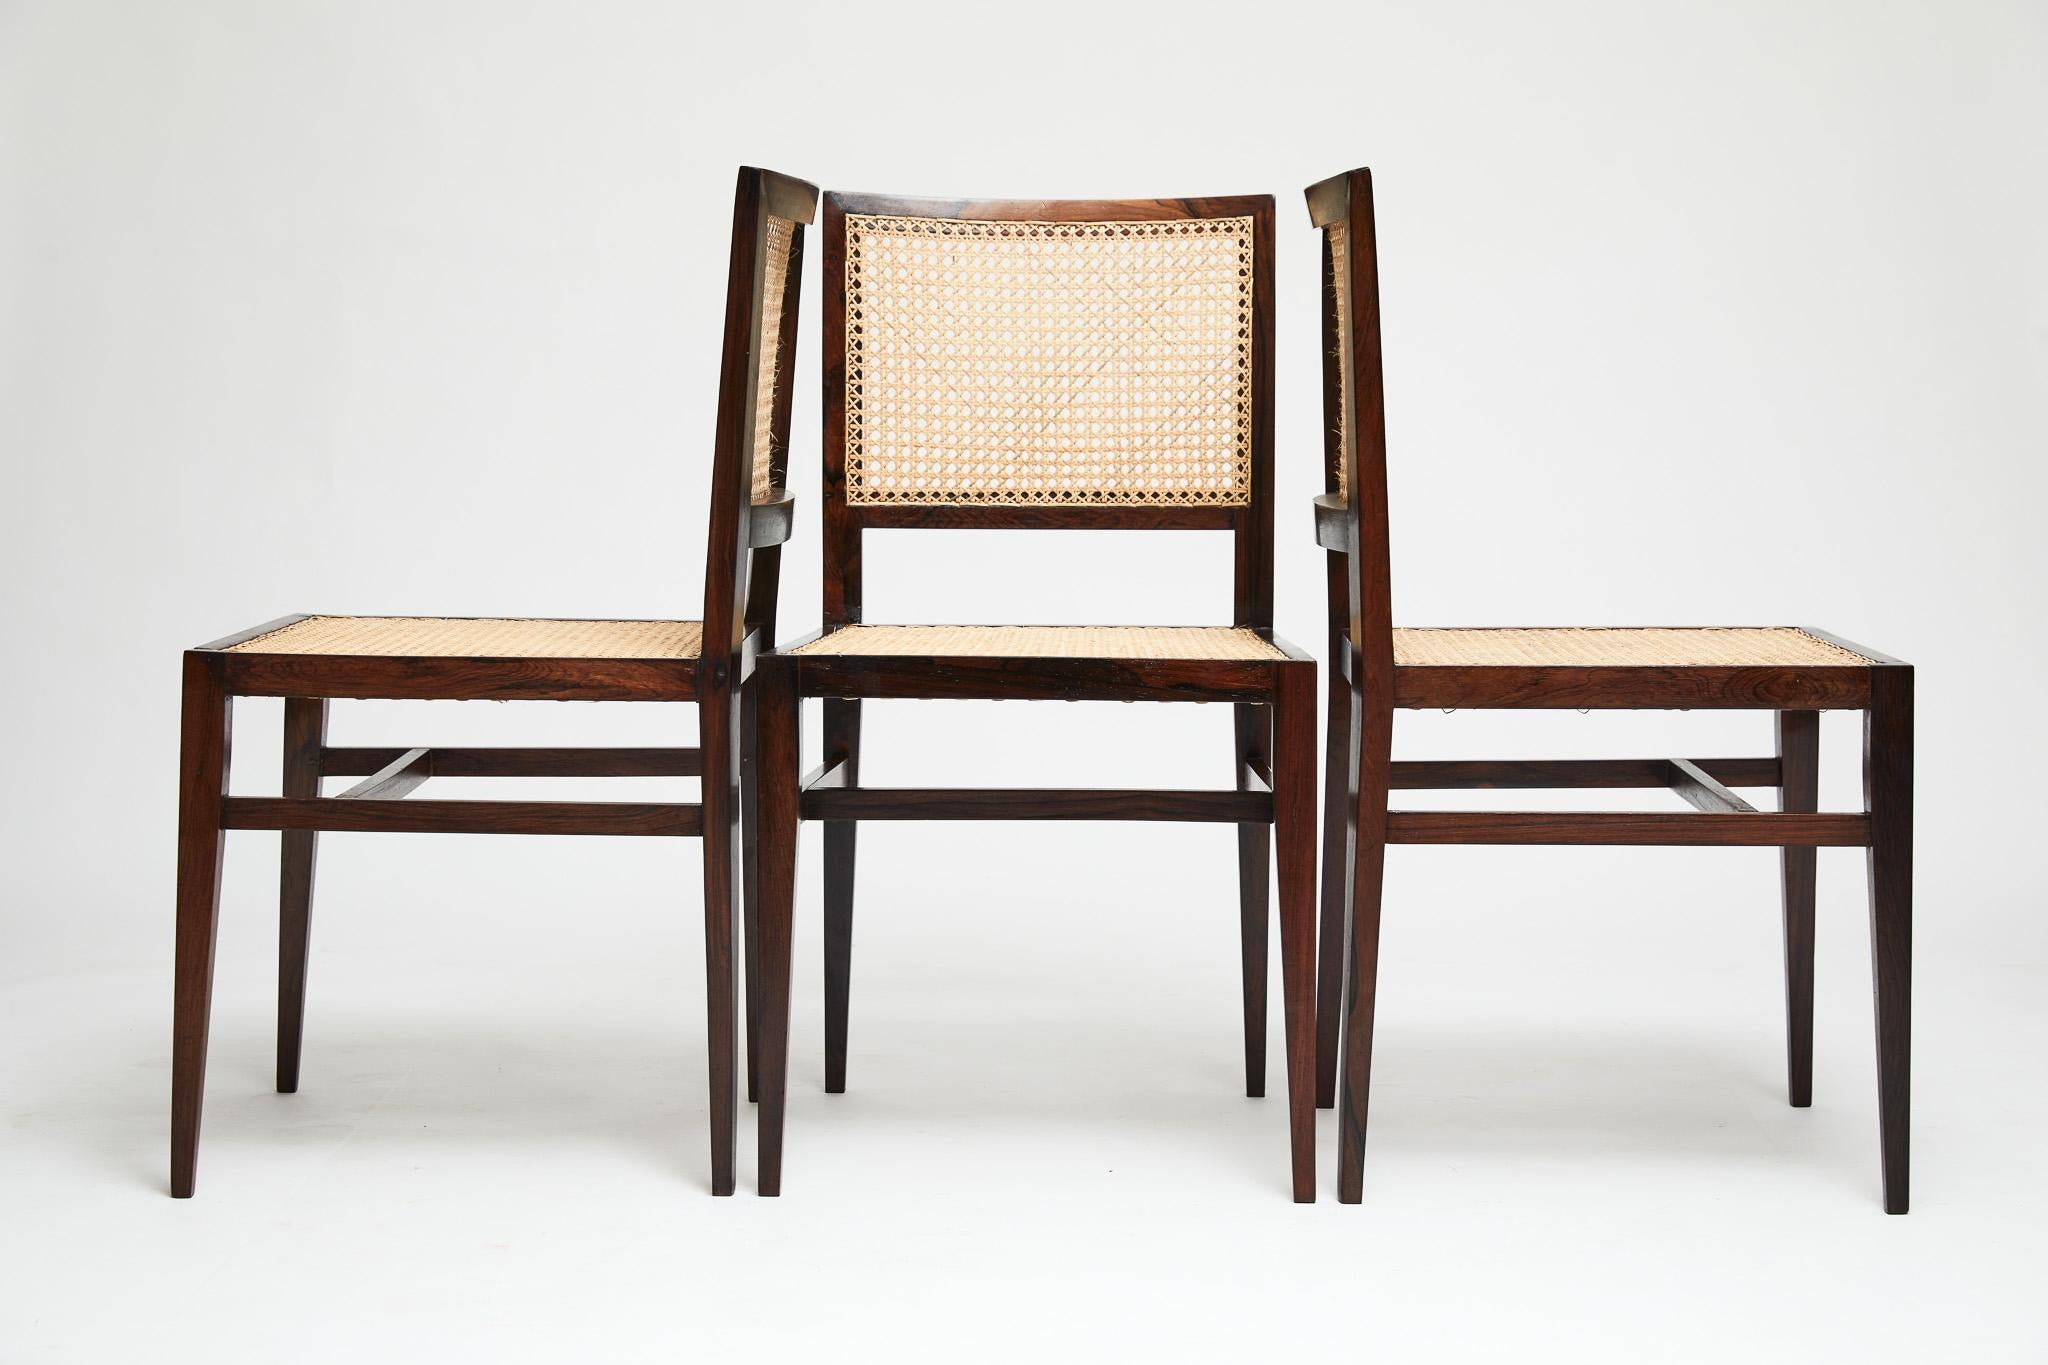 Brazilian Three Mid-Century Modern Hardwood & Cane Chairs by Joaquim Tenreiro, 1950 Brazil For Sale